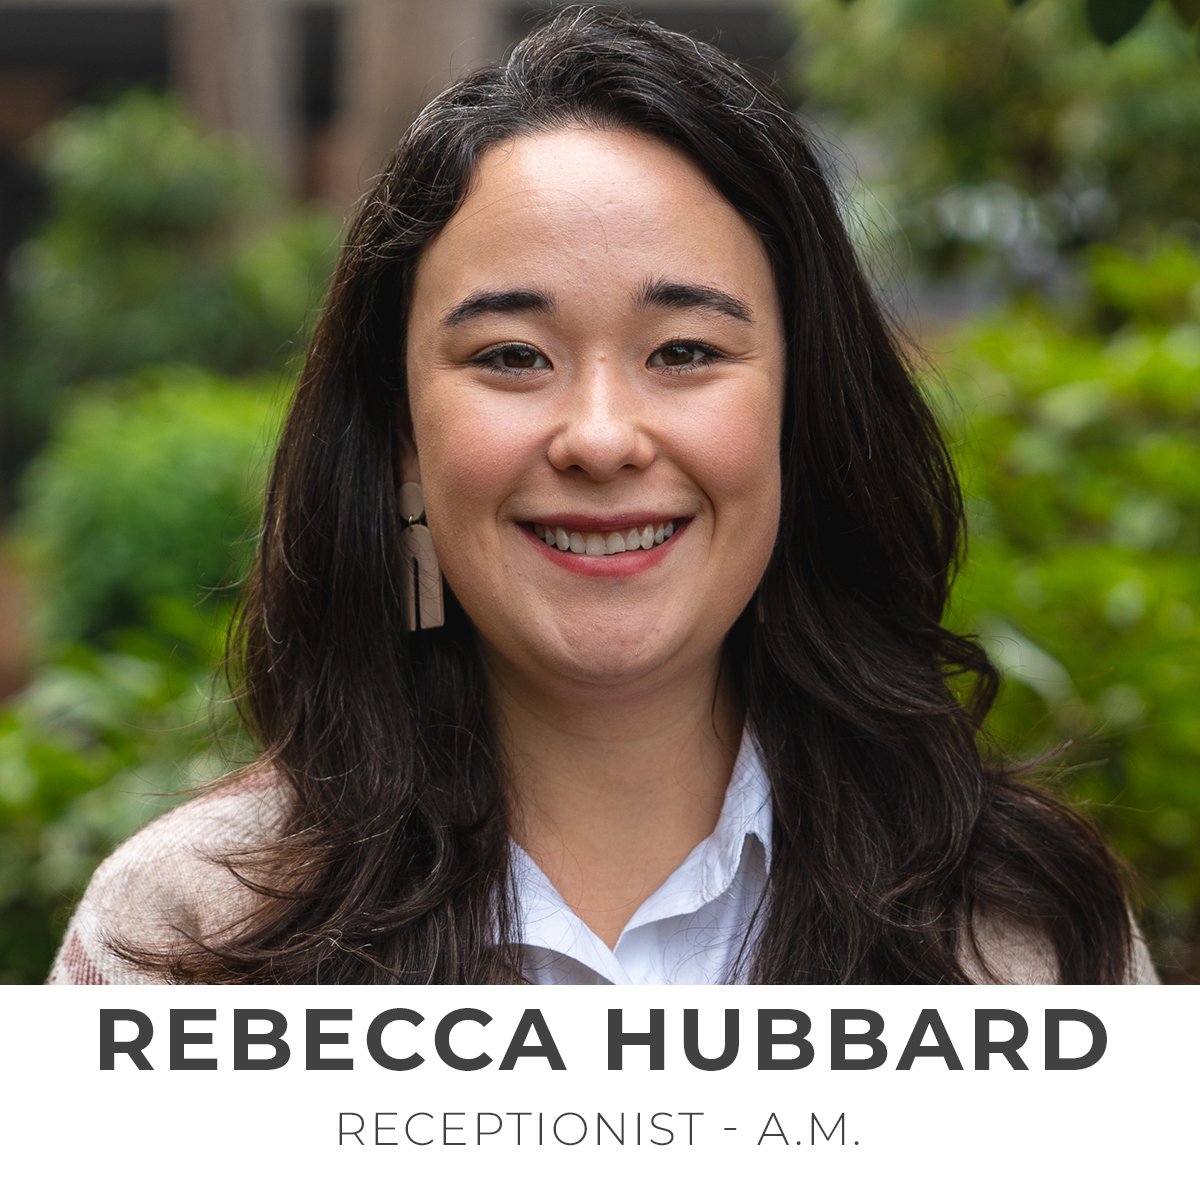 Rebecca Hubbard, Receptionist - A.M.